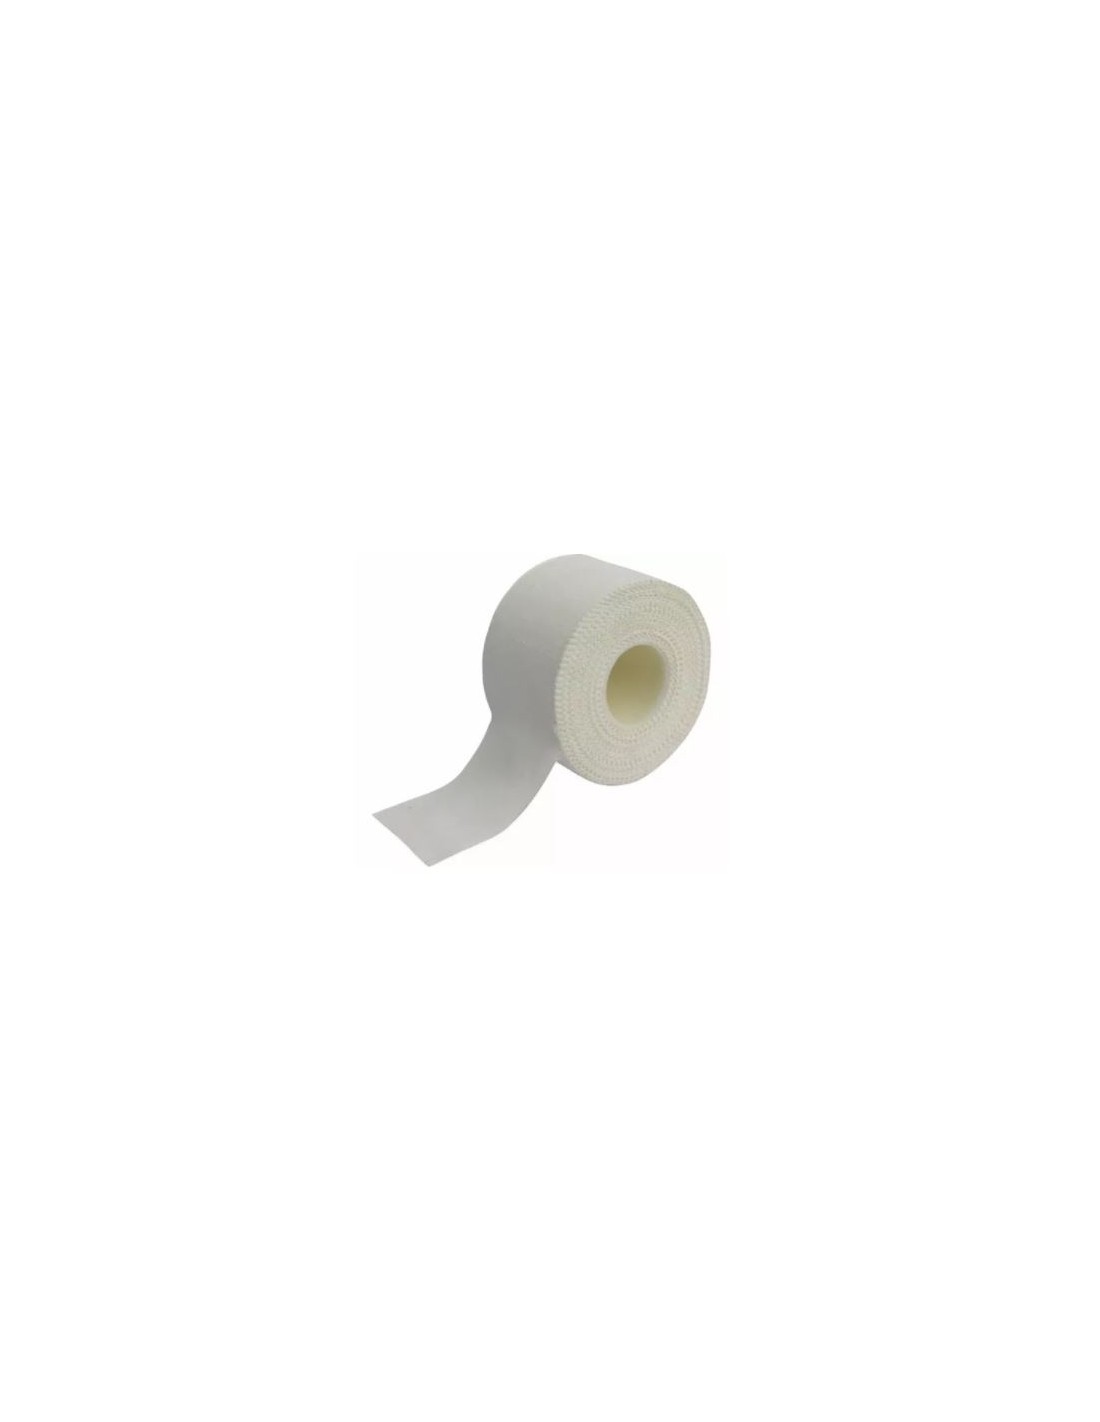 Venda Tape para vendaje funcional 3,8 cm X 10 m Blanco - Sanisus Medical